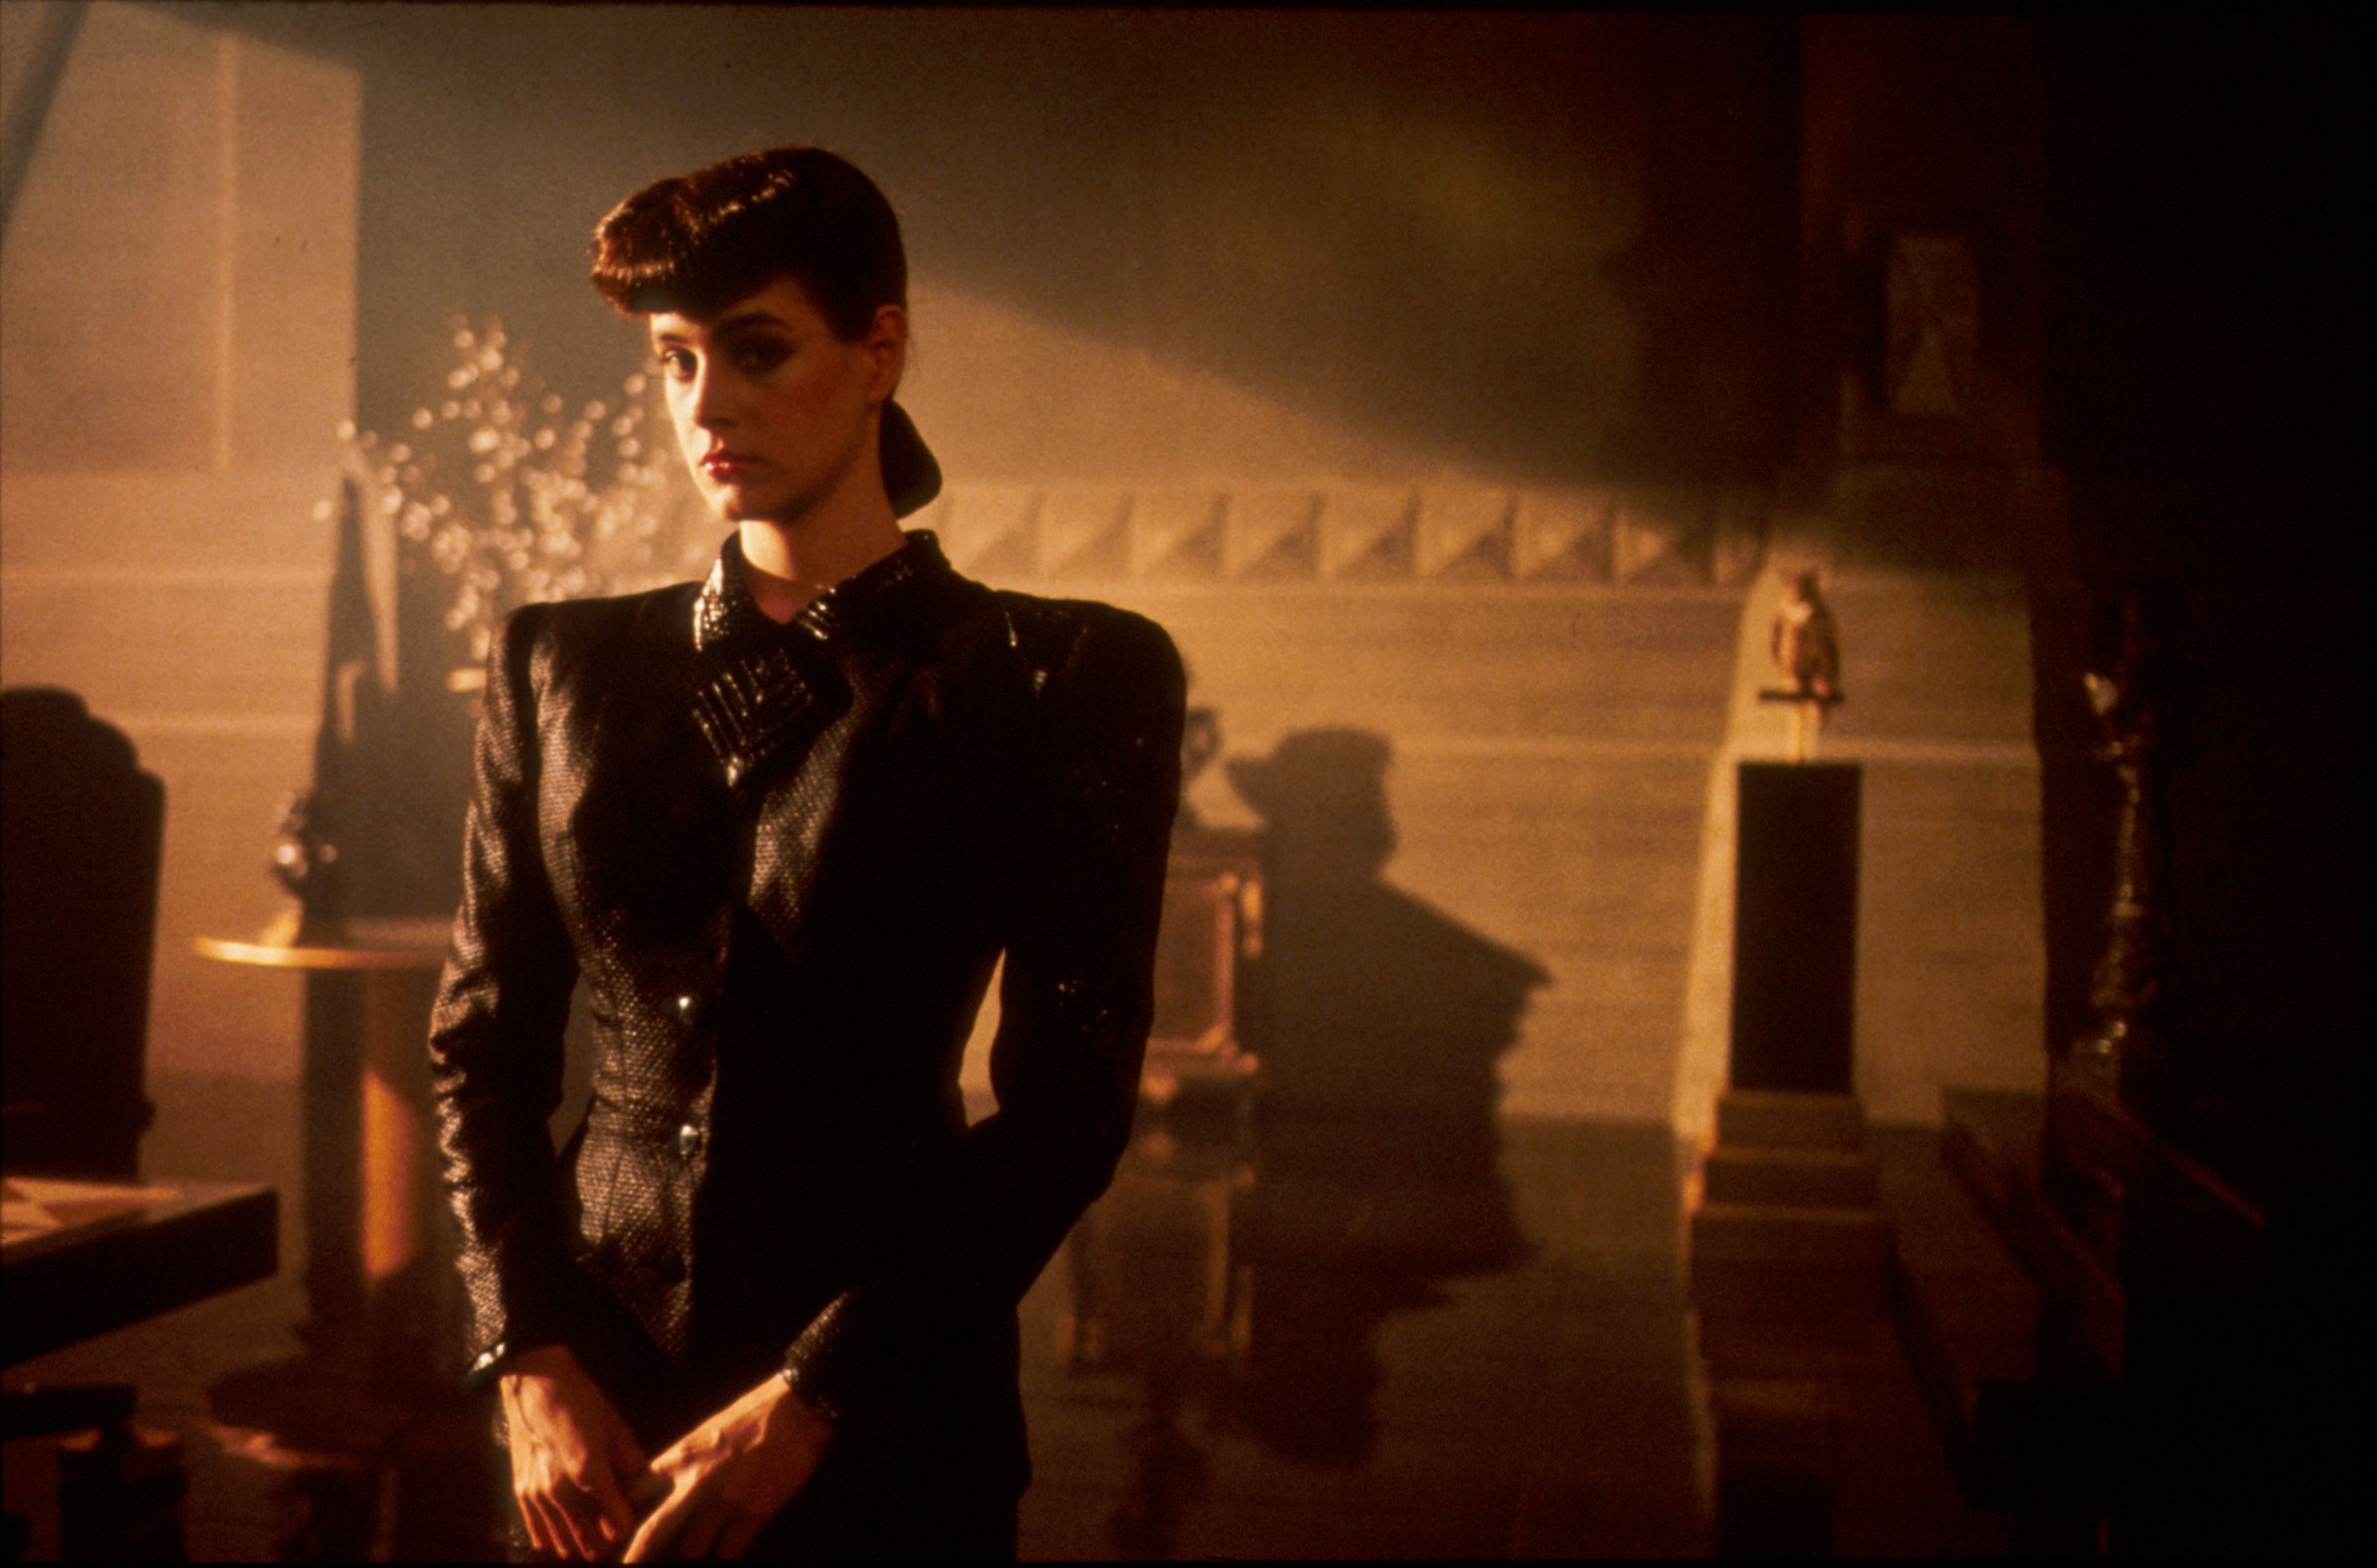 Blade Runner (1/10) Movie CLIP - She's a Replicant (1982) HD 